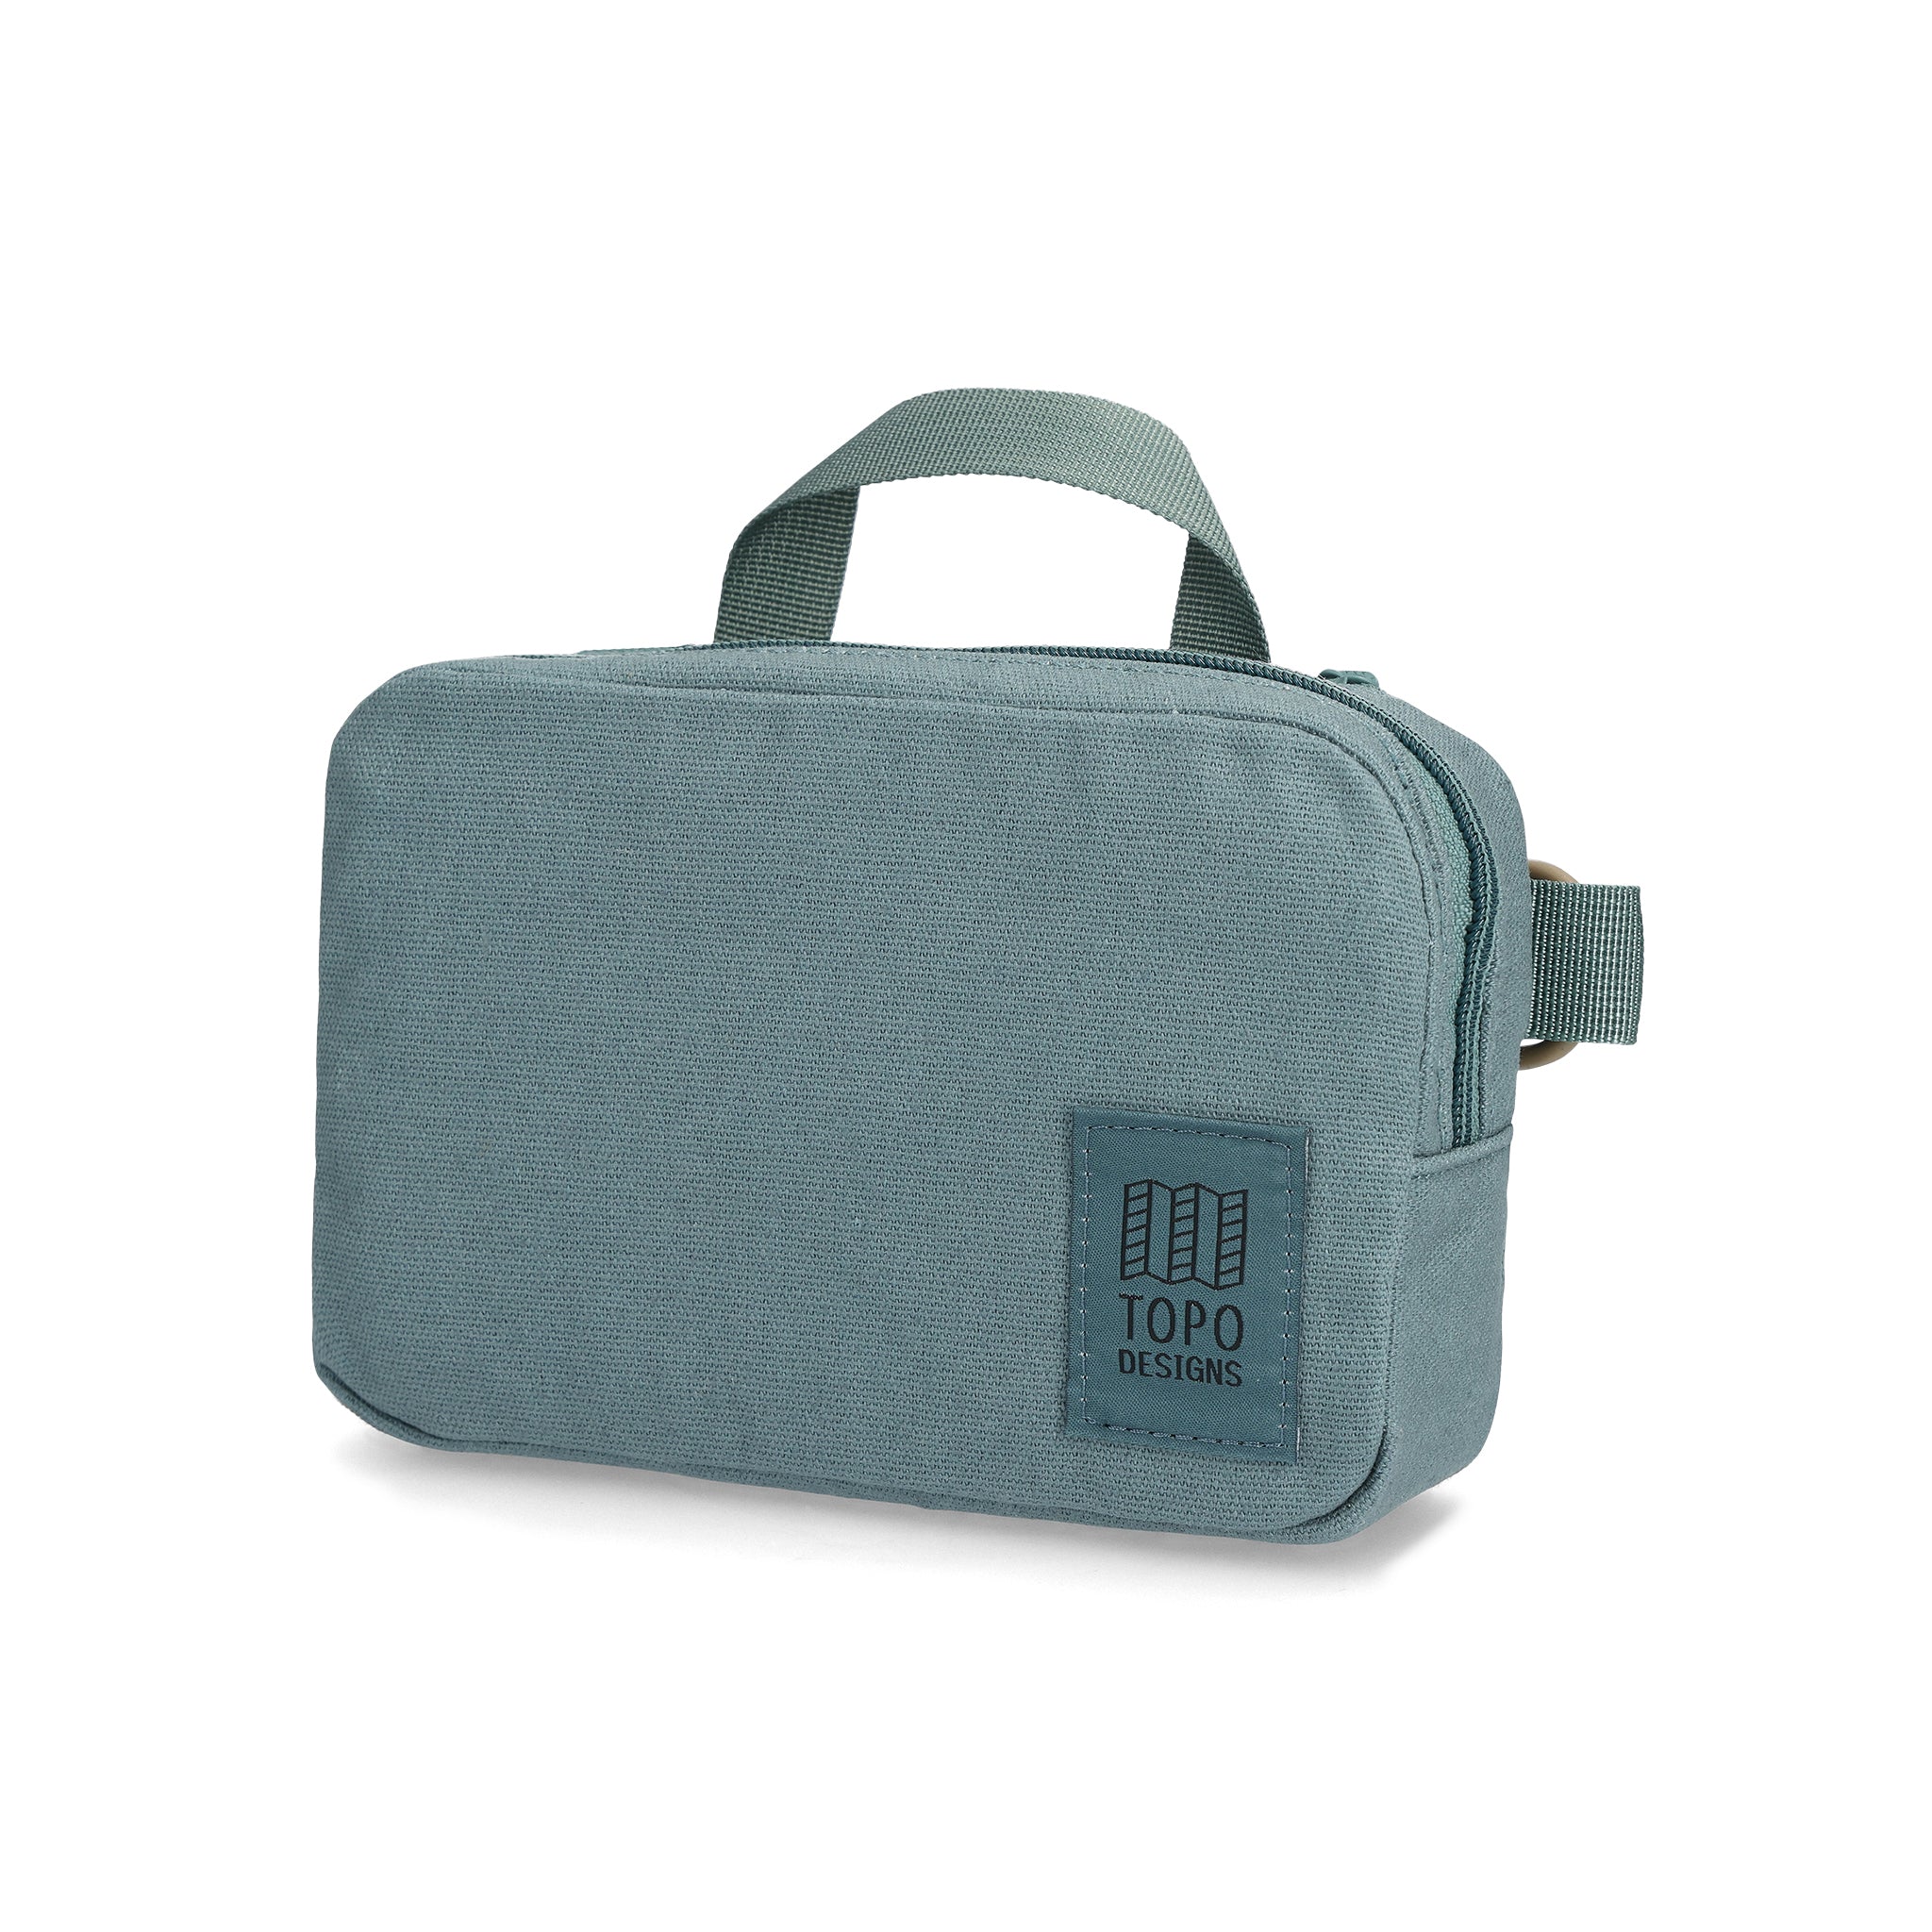 Front View of Topo Designs Dirt Belt Bag in "Sea Pine"